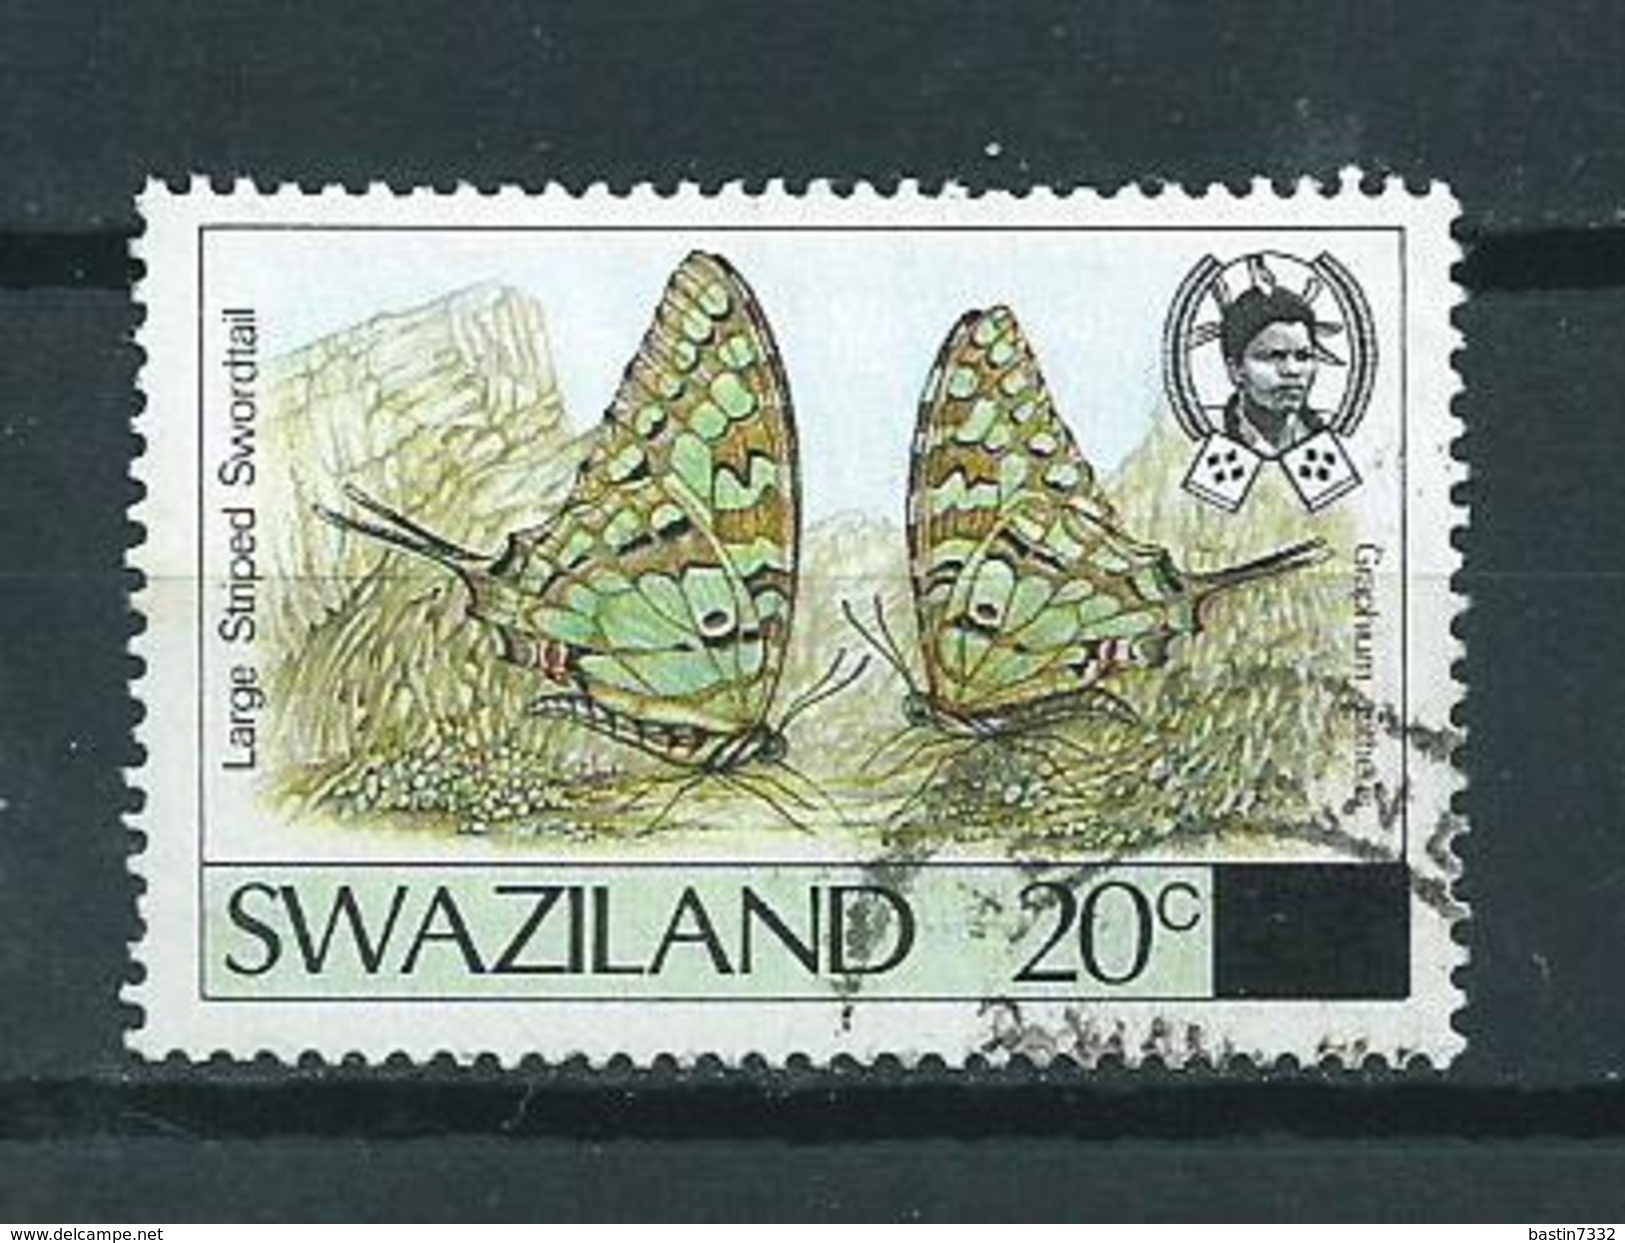 1990 Swaziland Overprint,vlinder,butterfly,papillon,schmetterlinge Used/gebruikt/oblitere - Swaziland (1968-...)